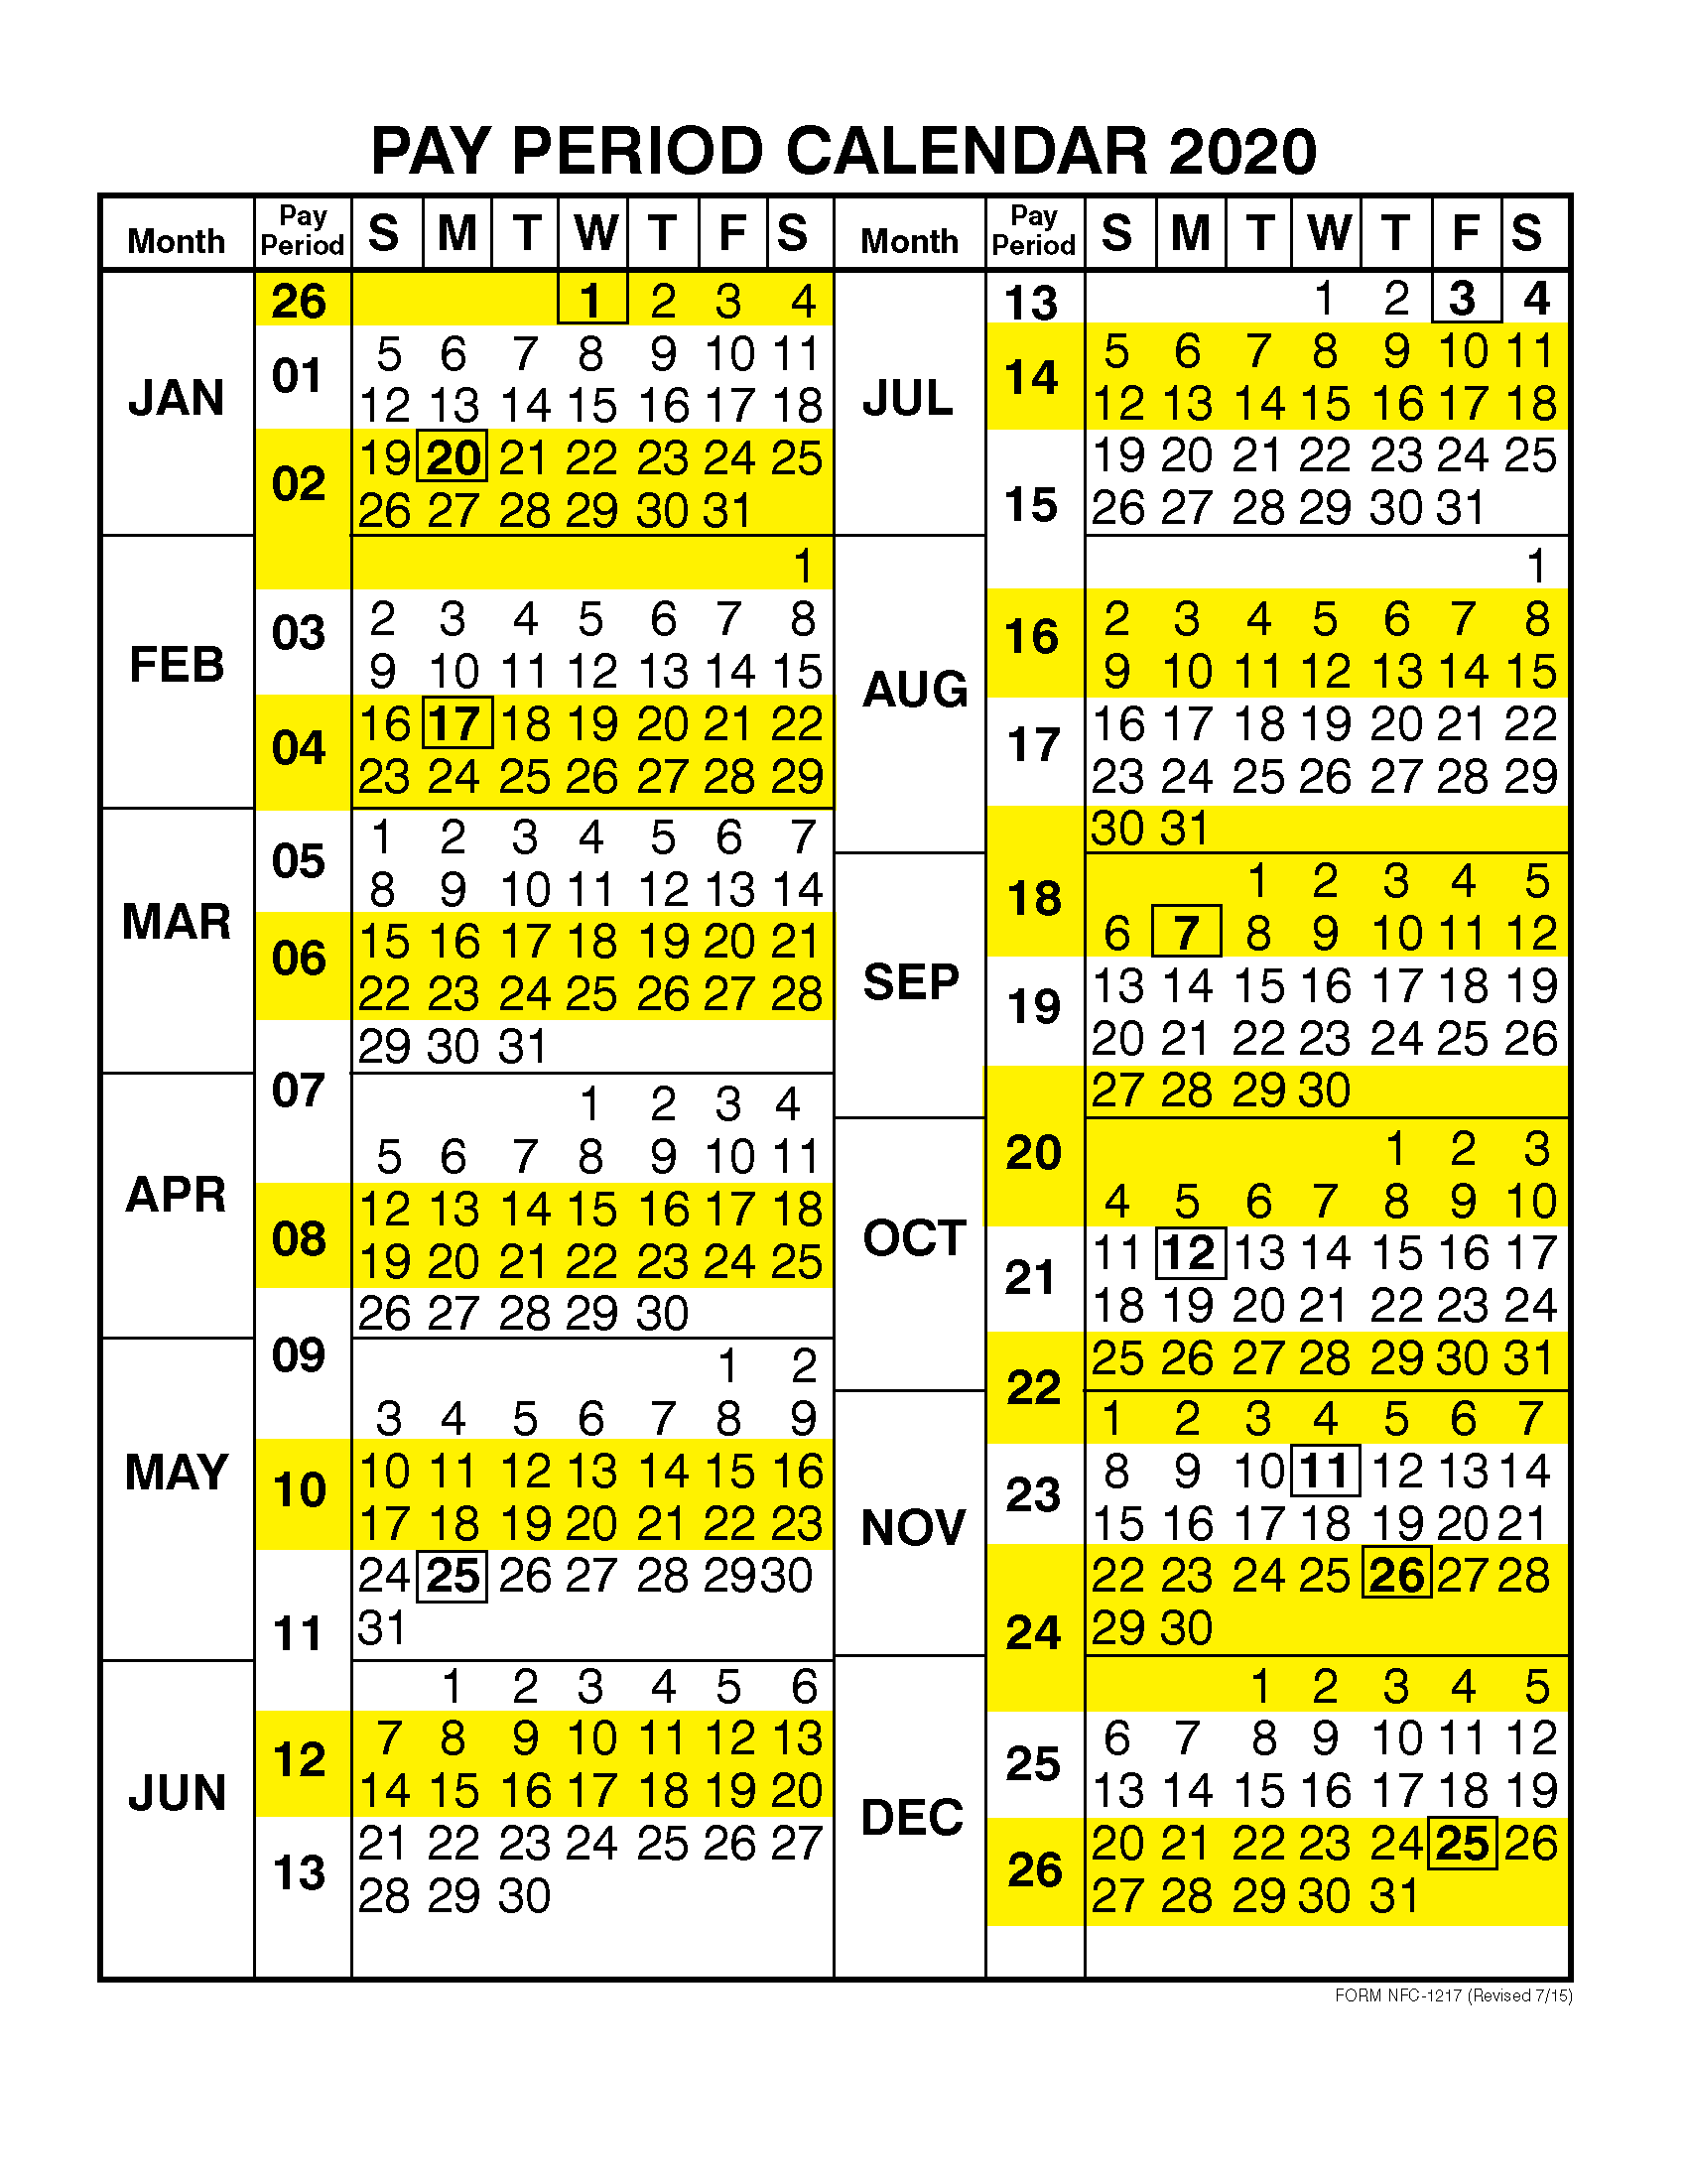 pay-period-calendar-2020-by-calendar-year